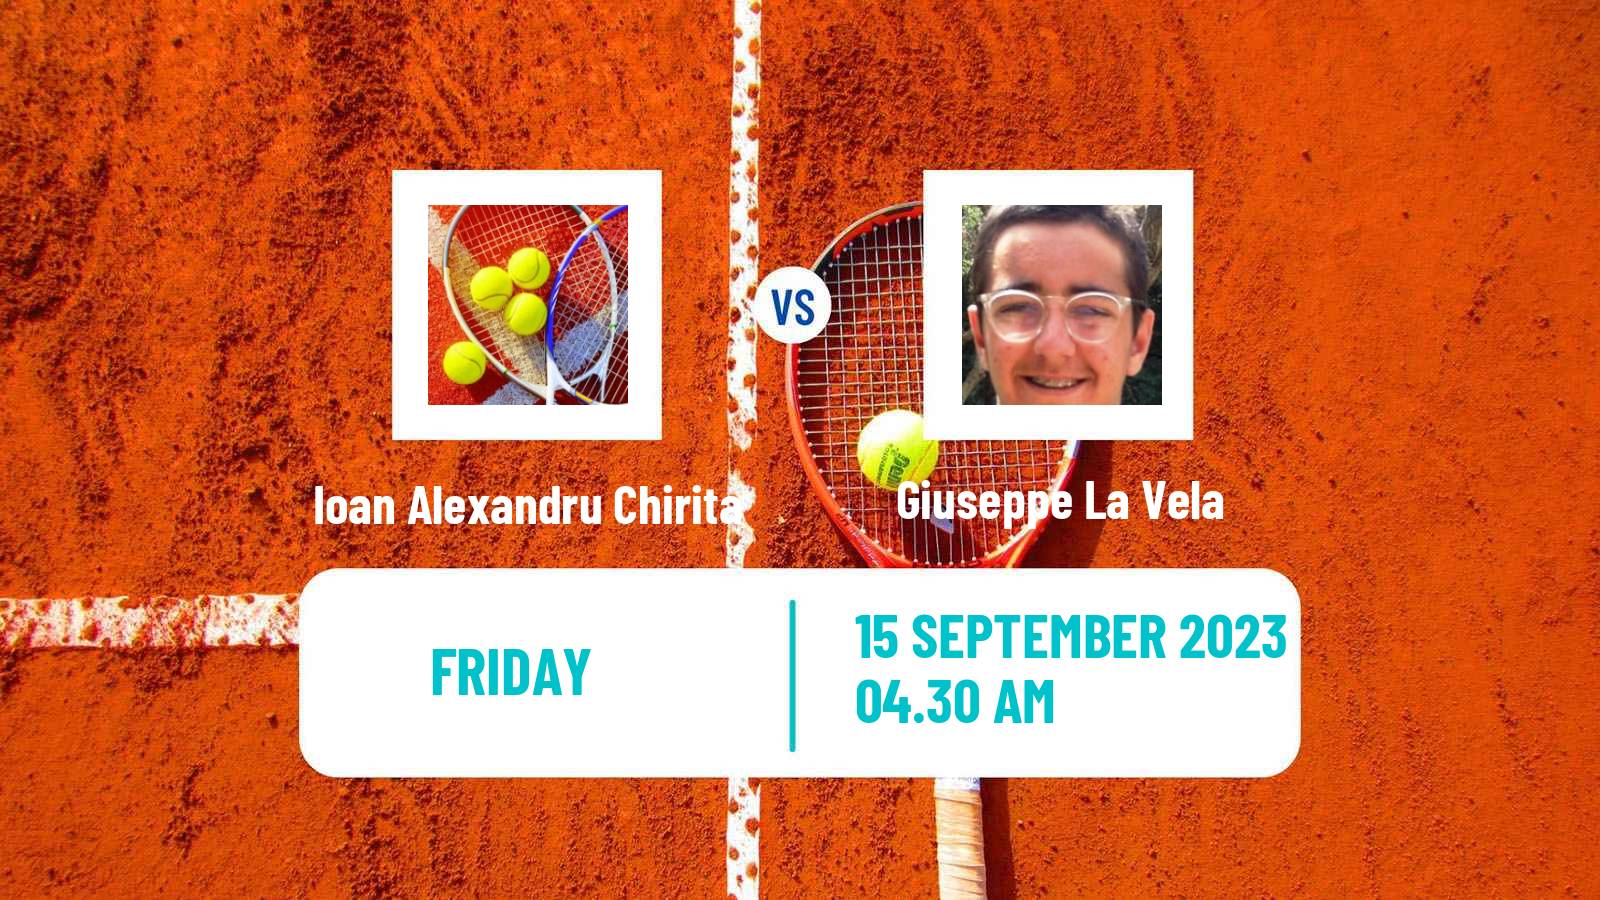 Tennis ITF M15 Satu Mare Men Ioan Alexandru Chirita - Giuseppe La Vela